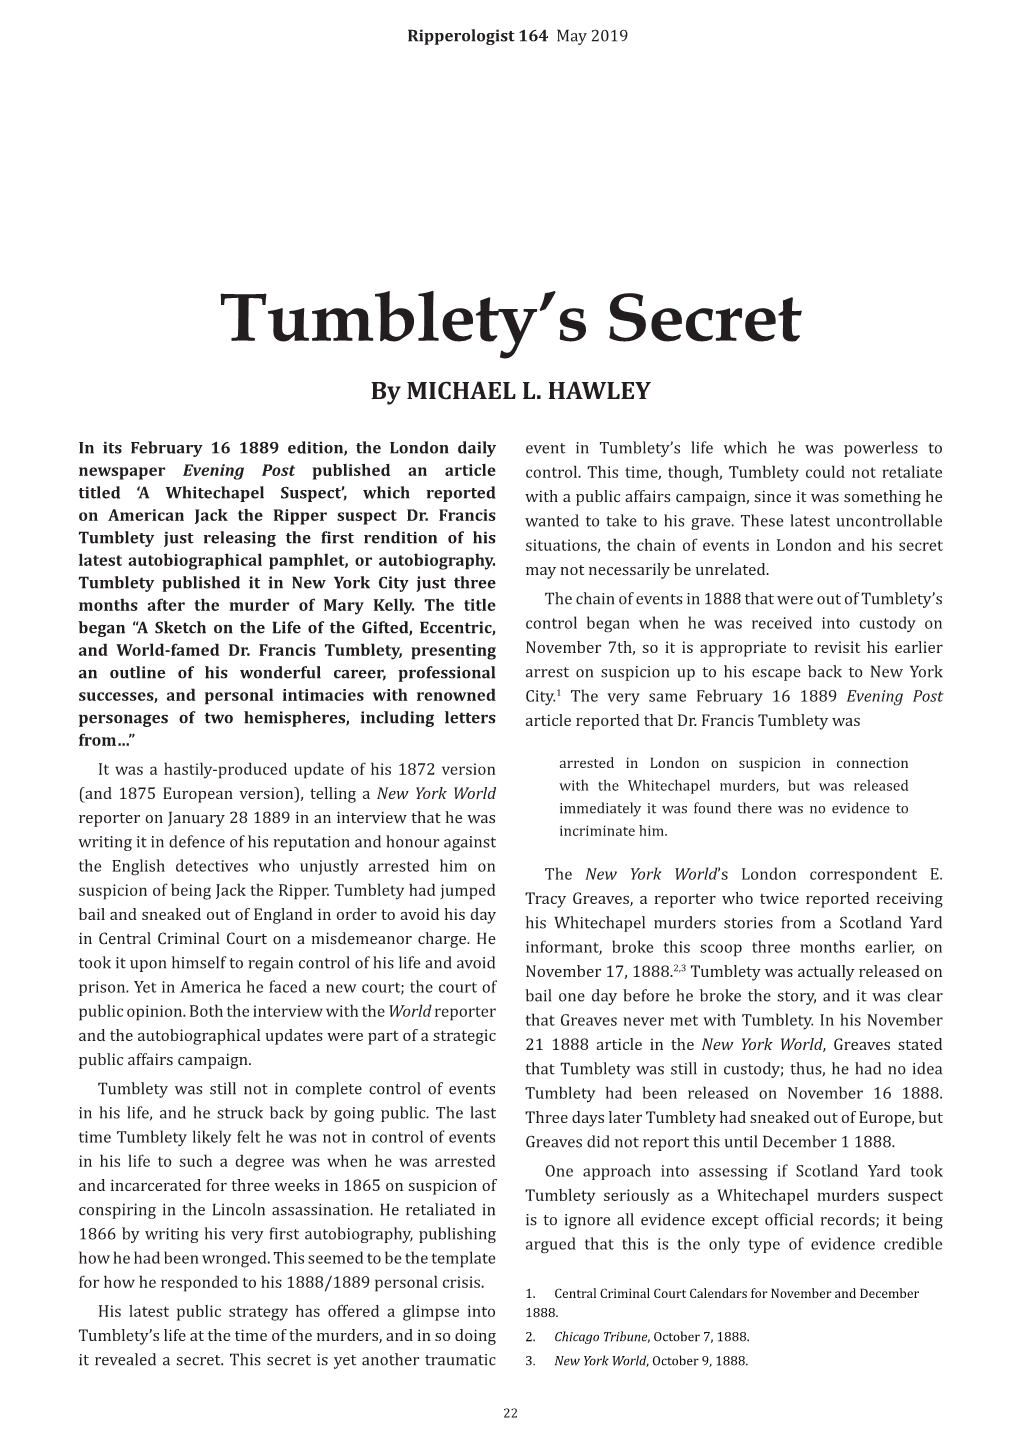 Tumblety's Secret